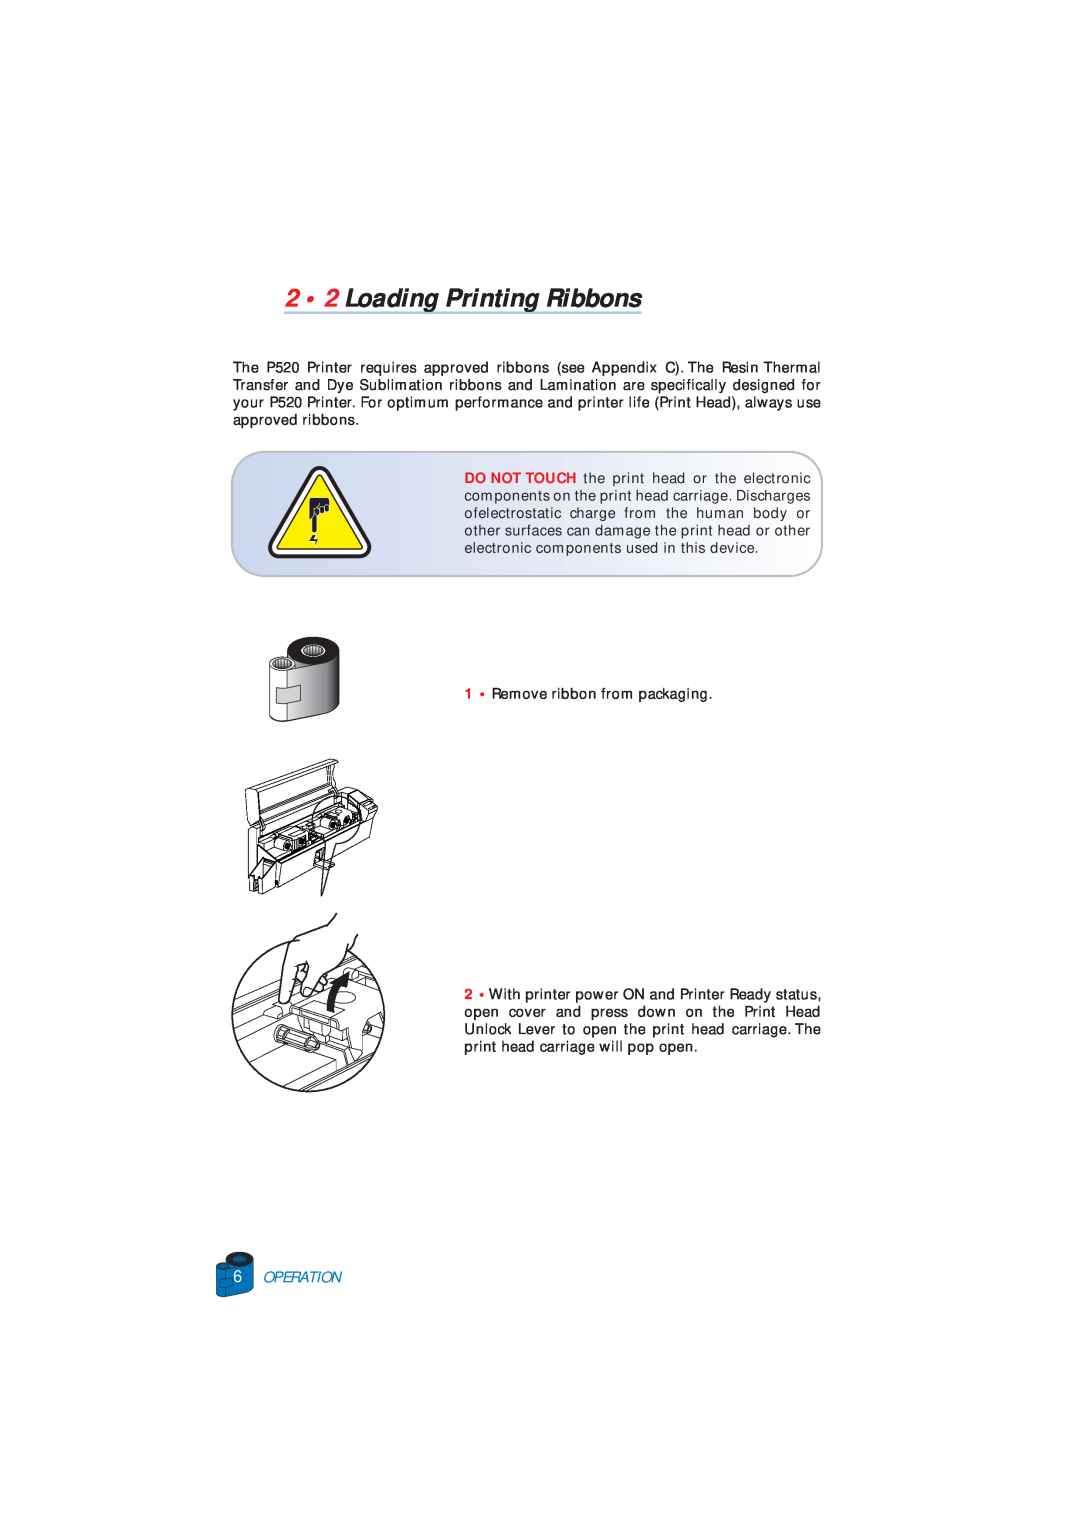 Zebra Technologies P520 user manual 2 2 Loading Printing Ribbons, Operation 